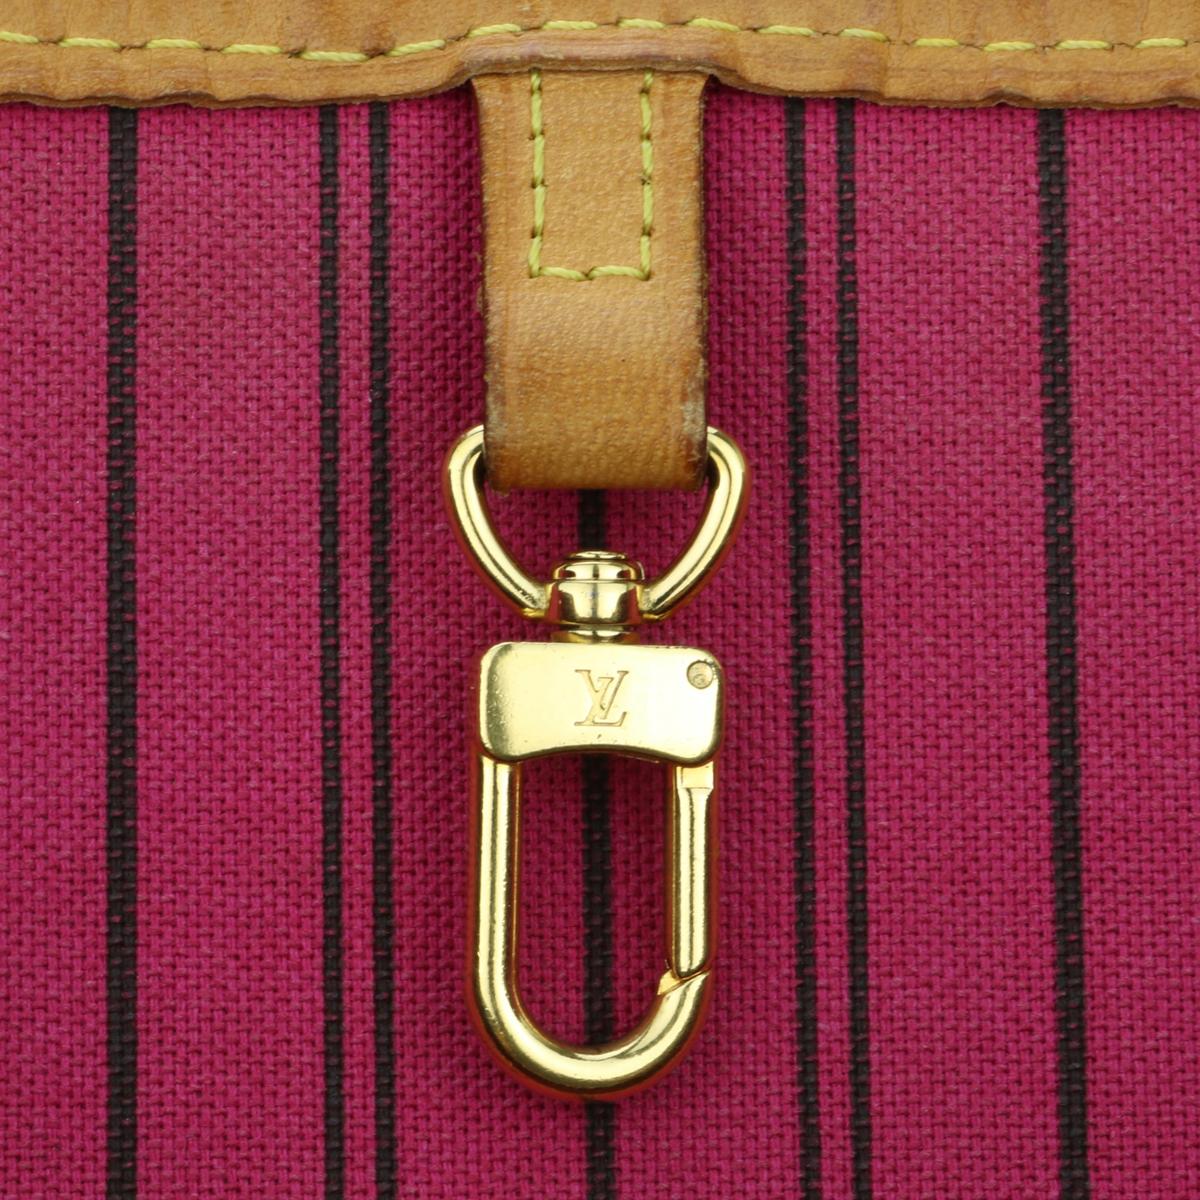 Louis Vuitton Neverfull MM Bag in Monogram with Pivoine Interior 2016 9